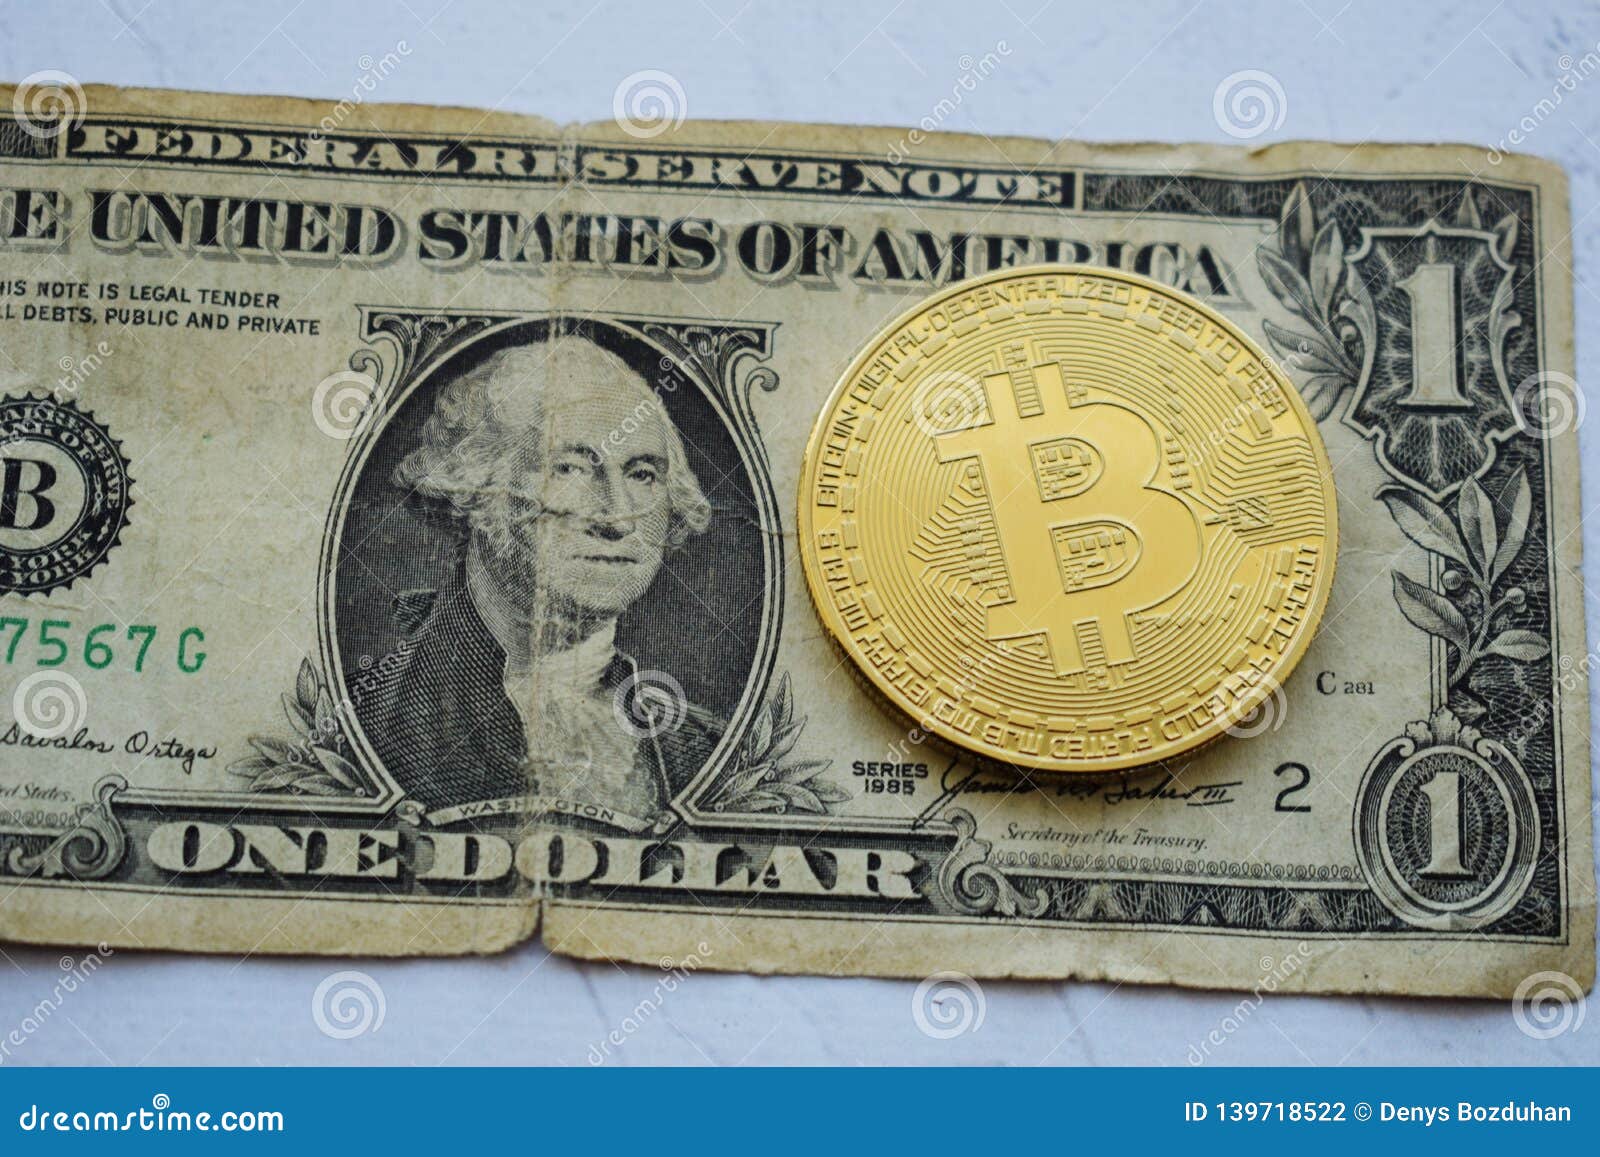 1 bitcoin in us dollars